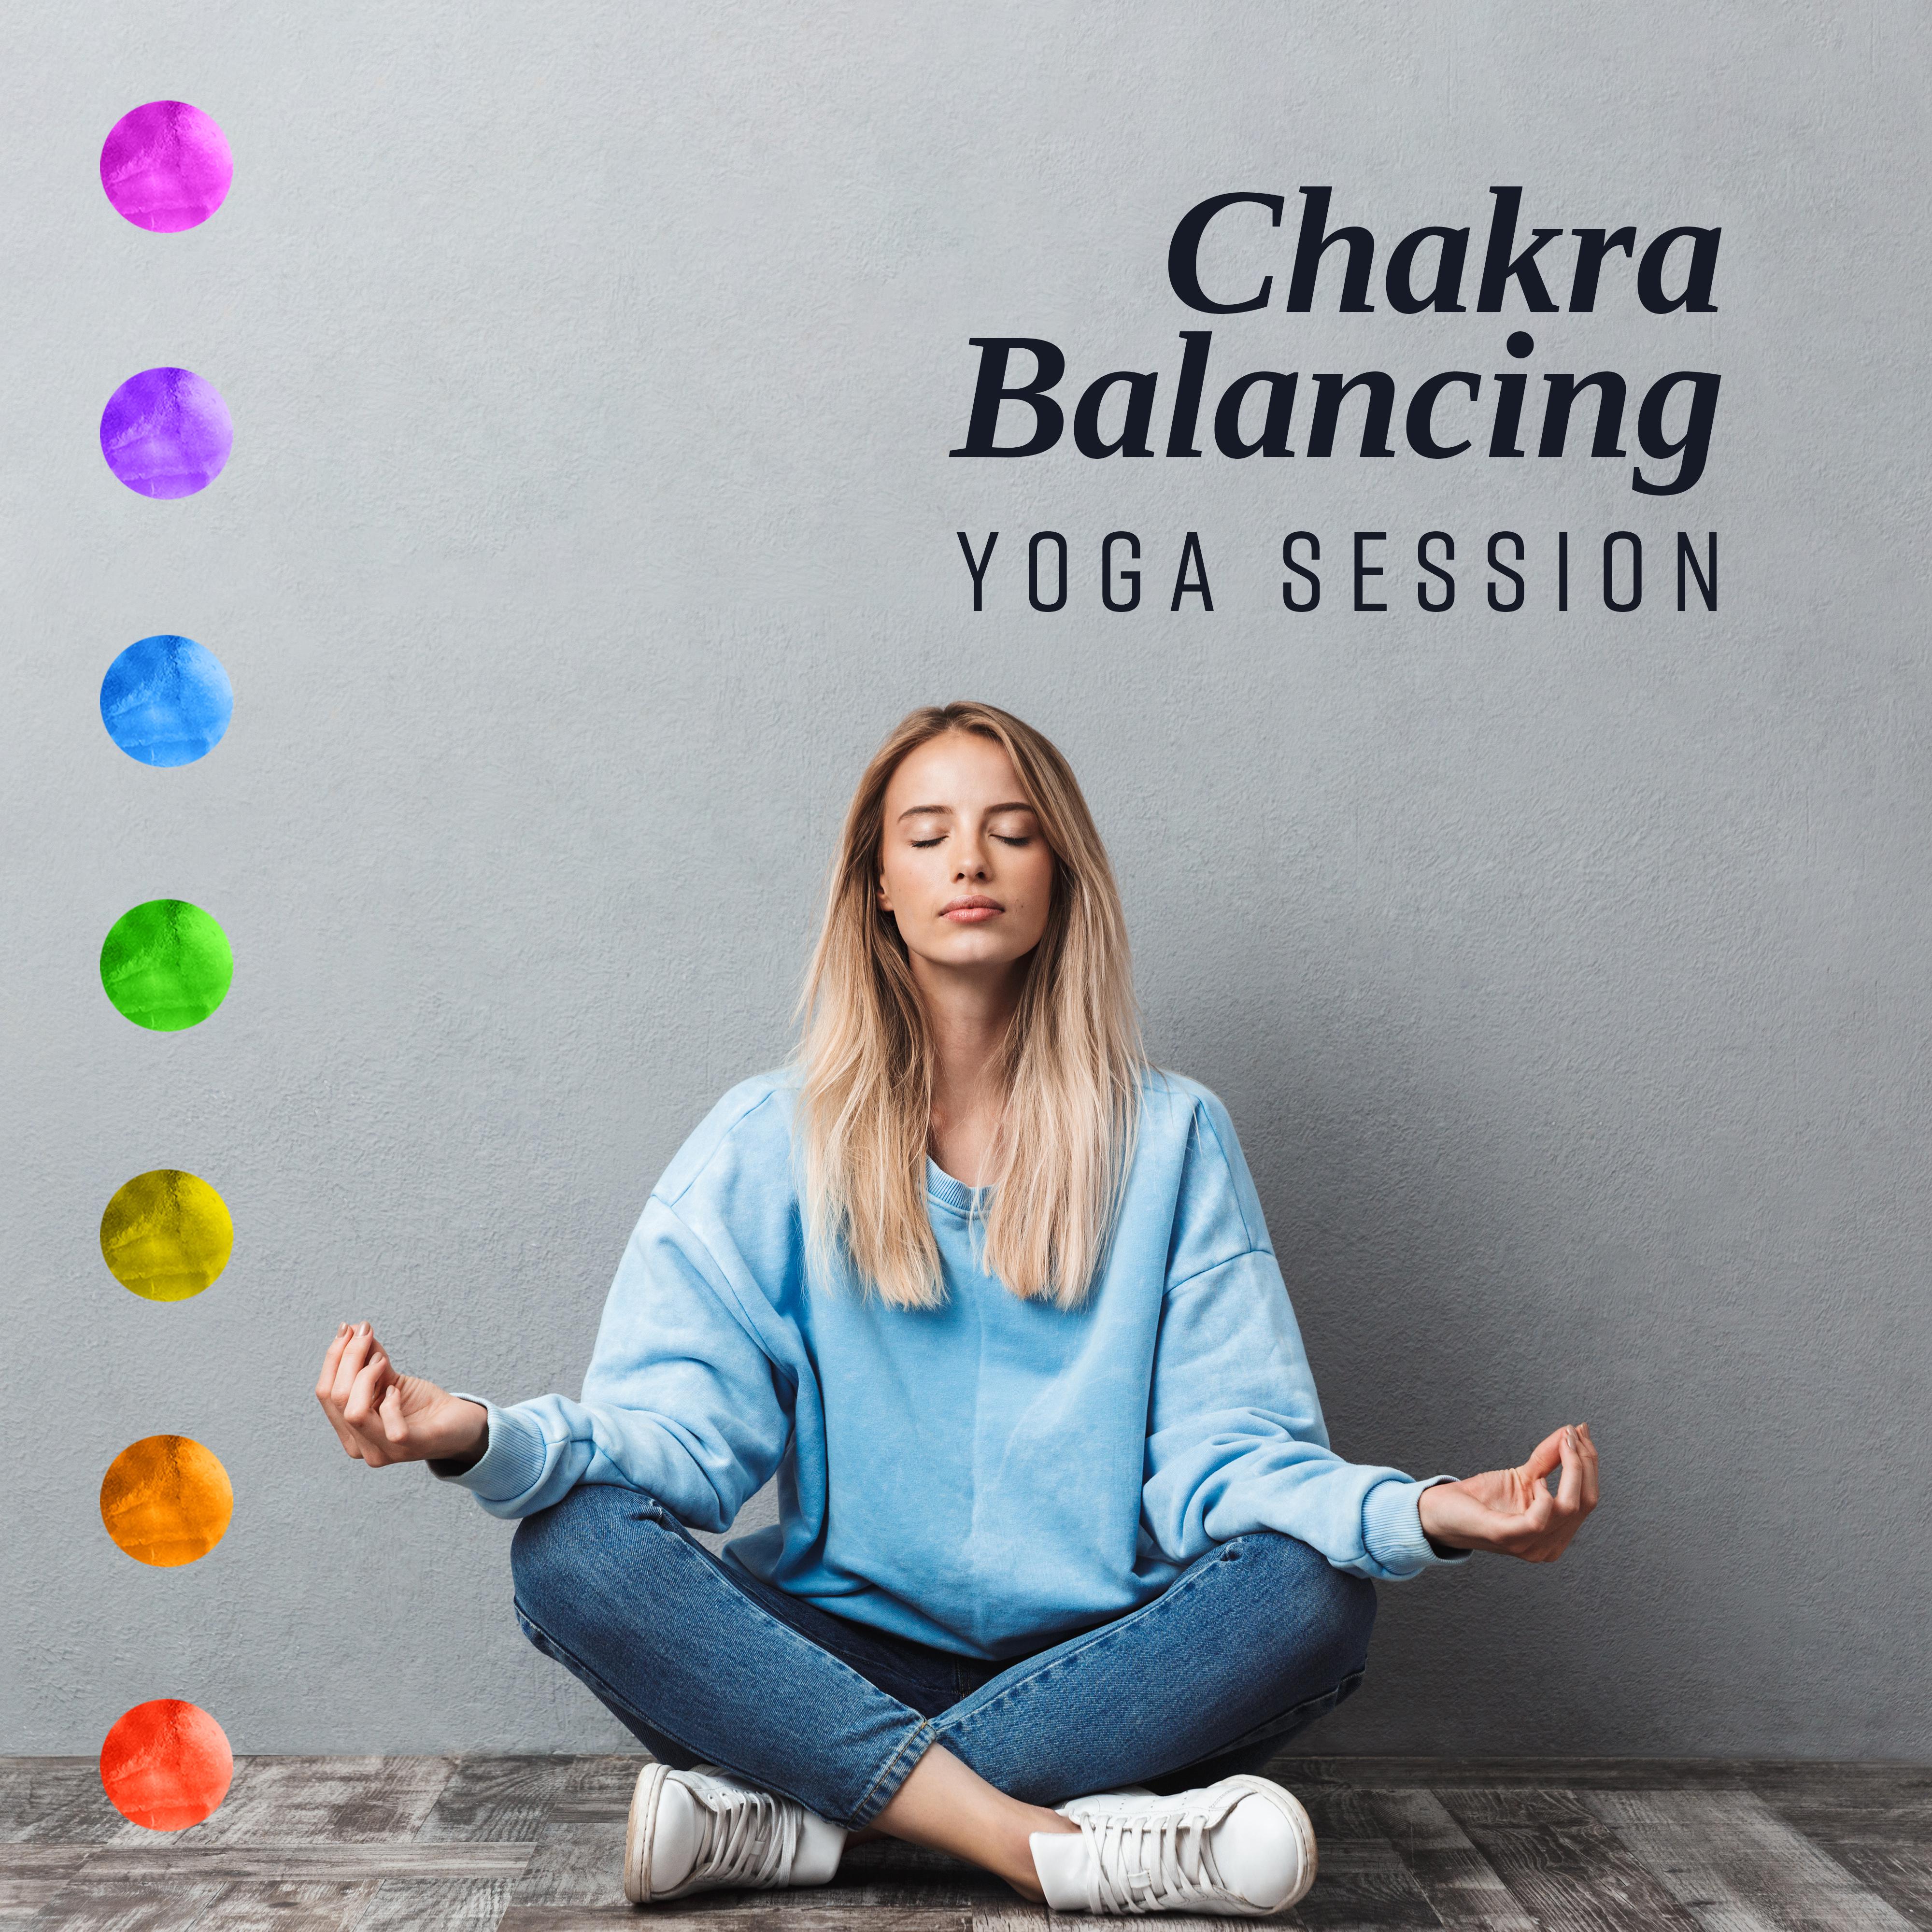 Chakra Balancing Yoga Session: New Age Music for Deep Meditation & Soul Relaxation